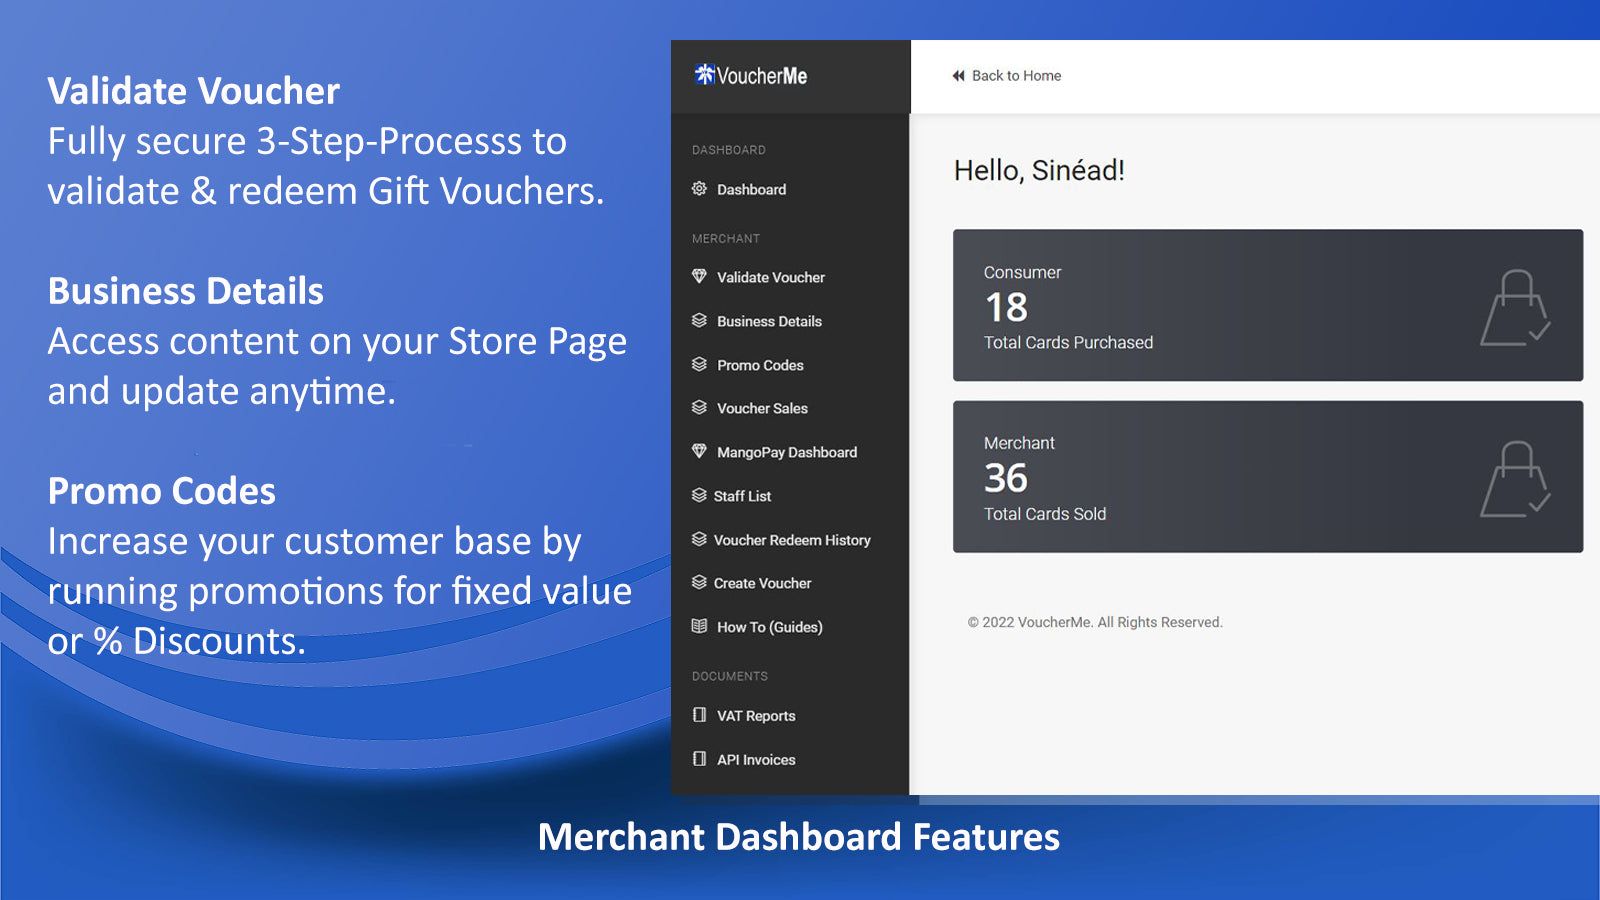 Merchant Dashboard Features 1